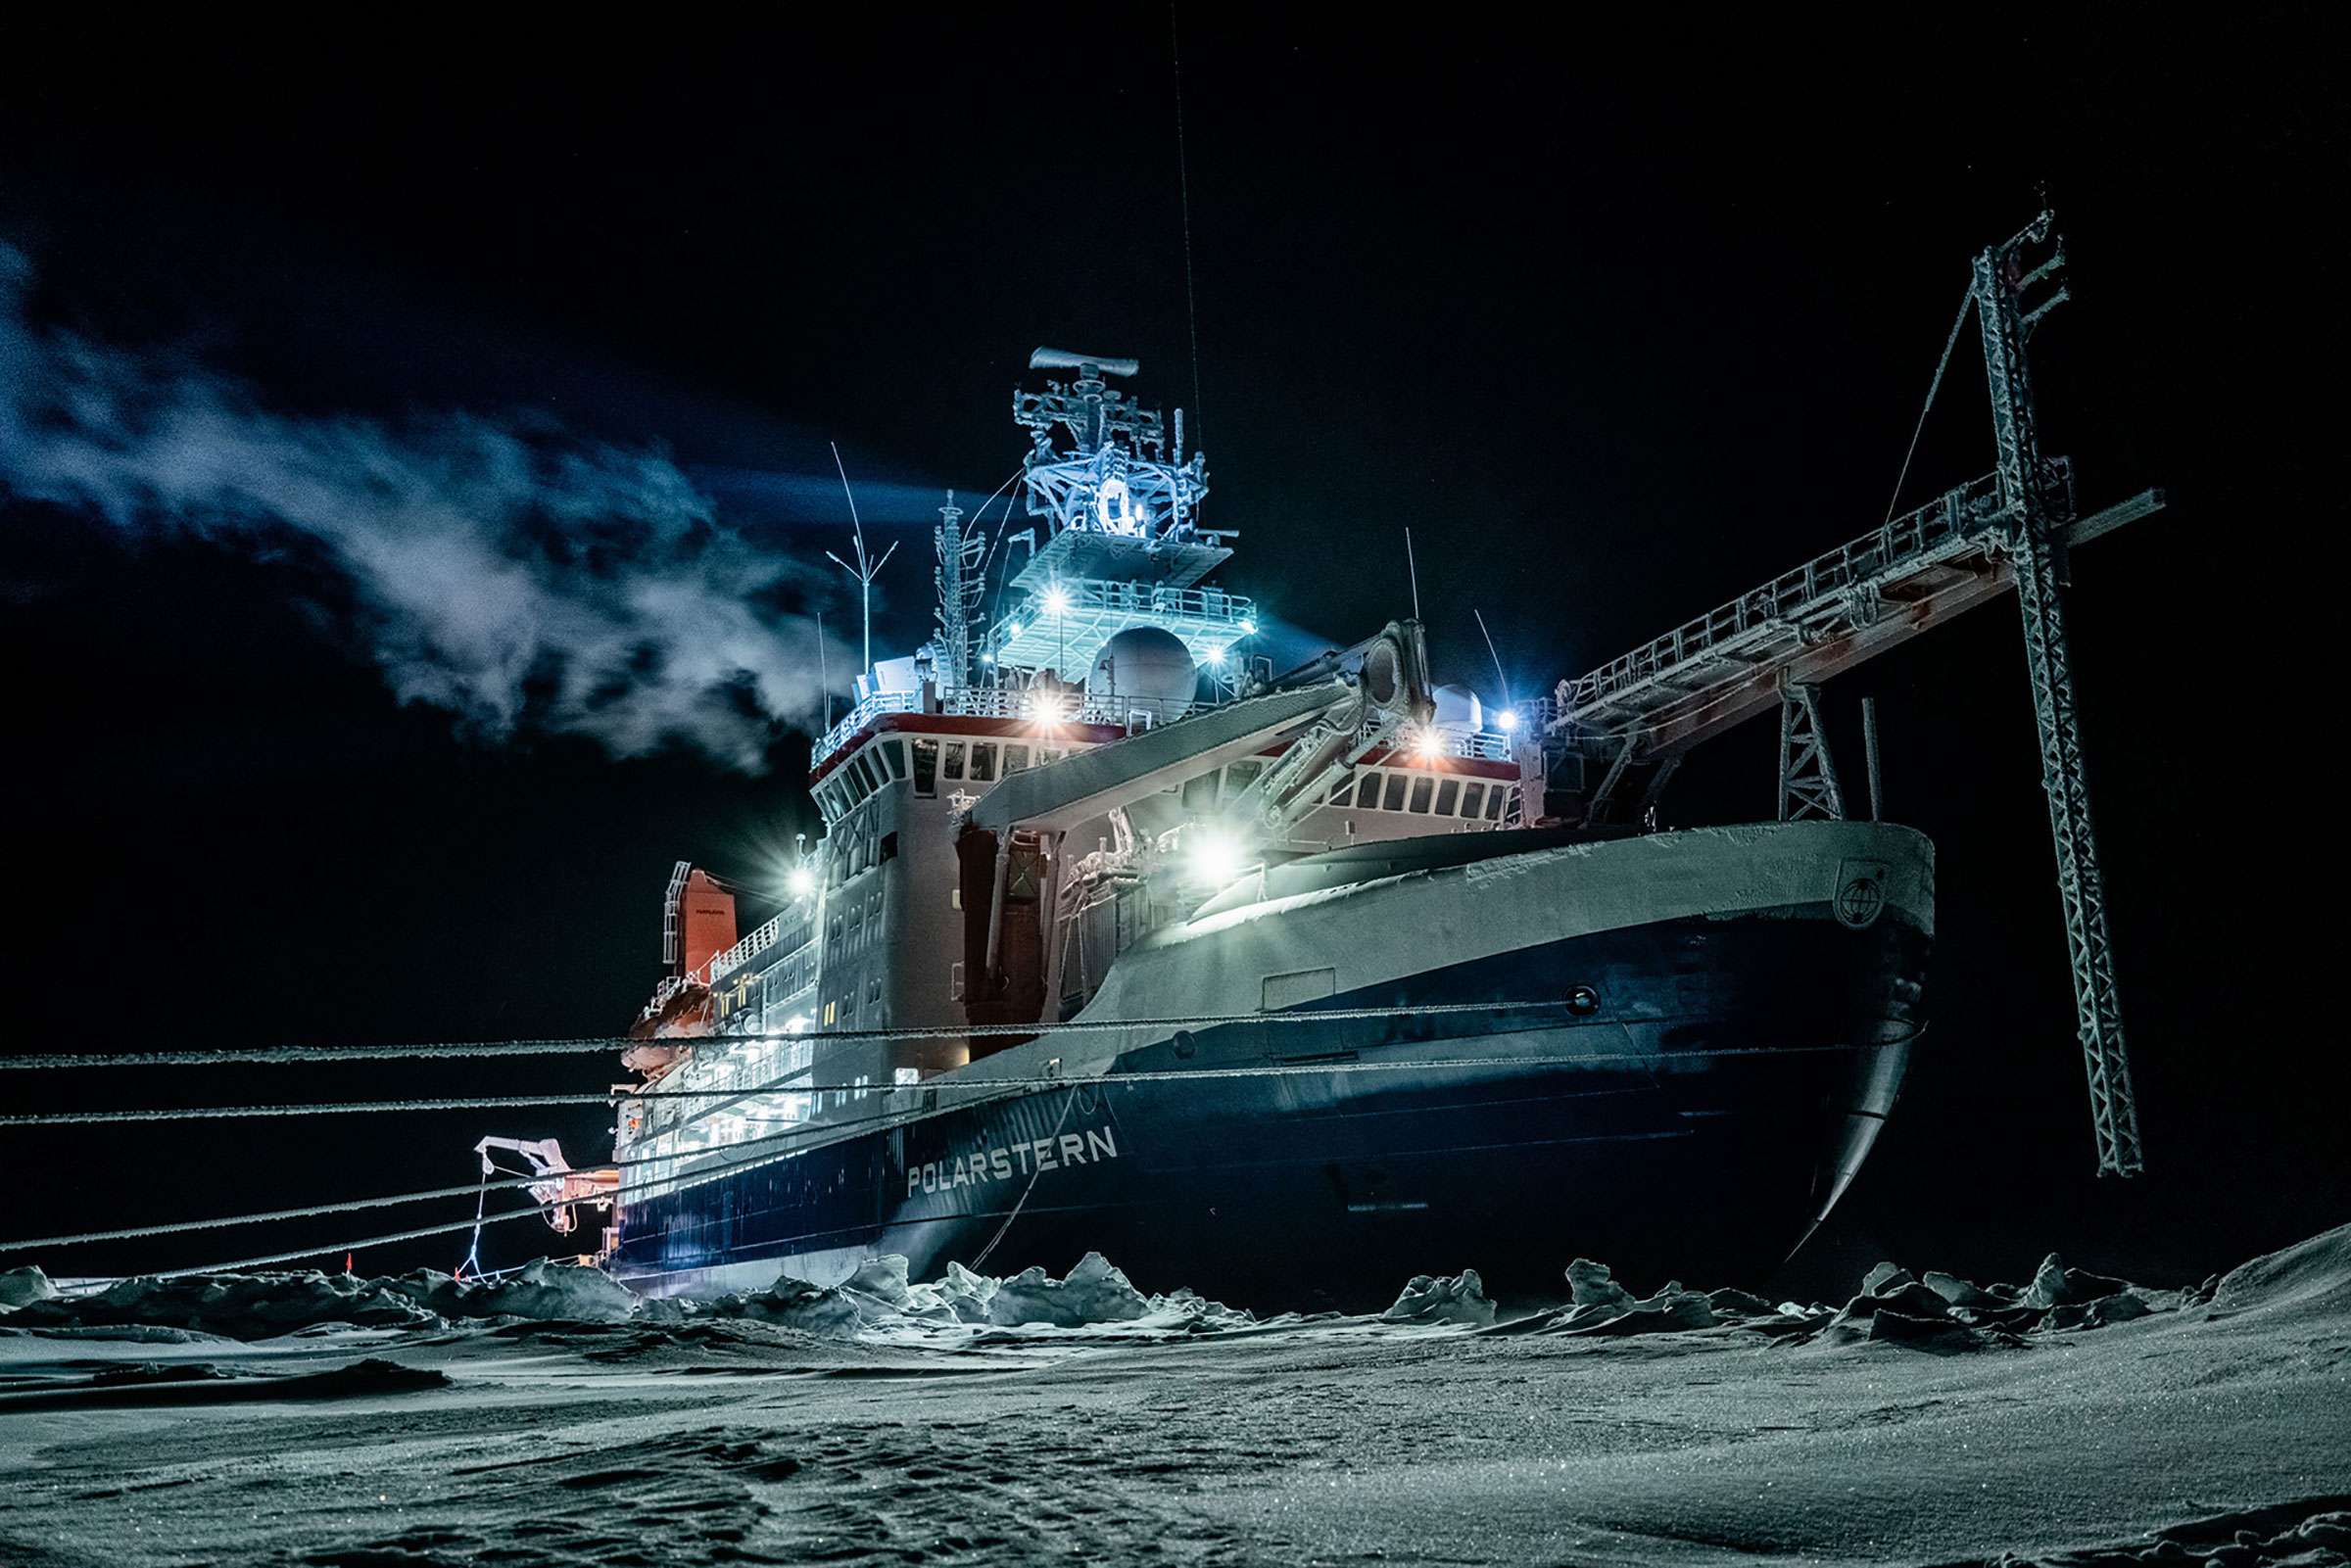 German research icebreaker "Polarstern" in the Central Arctic Ocean during polar night on Jan. 1, 2020.